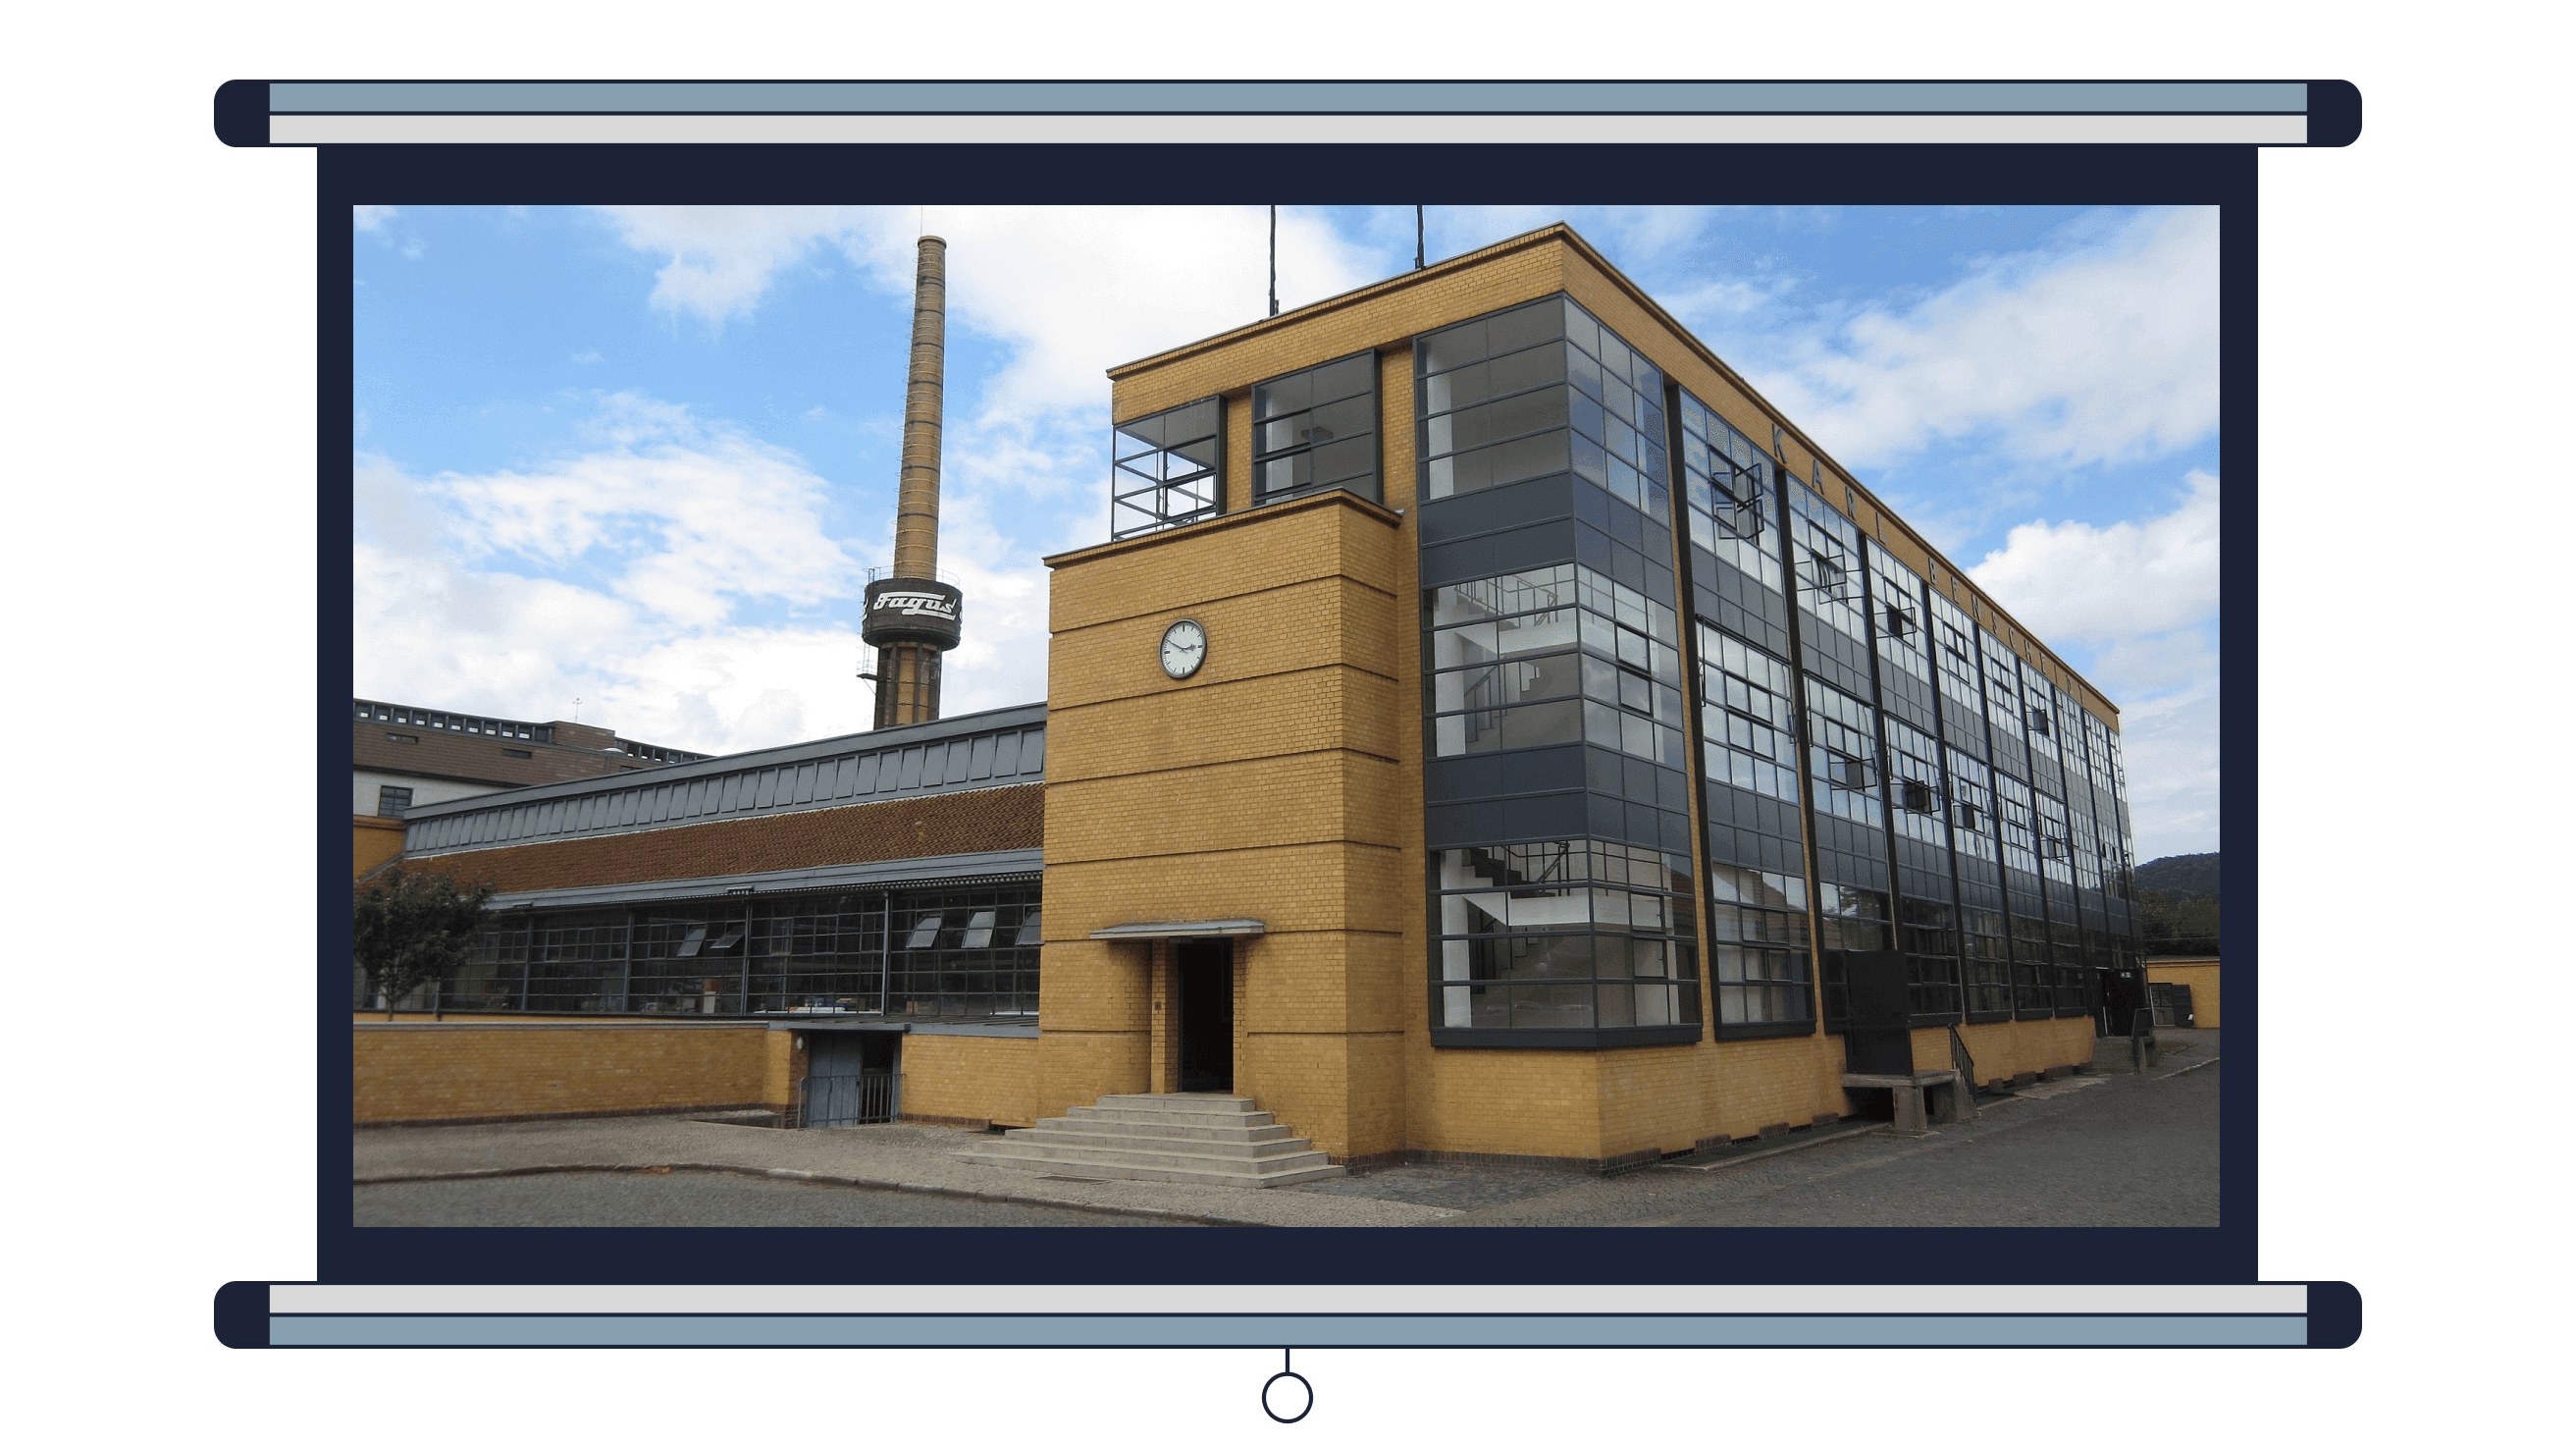 Пример 5. Фабрика «Фагус», Альфельд, Германия, архитекторы Вальтер Гропиус, Адольф Мейер<br><br>Фото: Olrik66 / Wikimedia Commons, CC BY-SA 4.0<br>